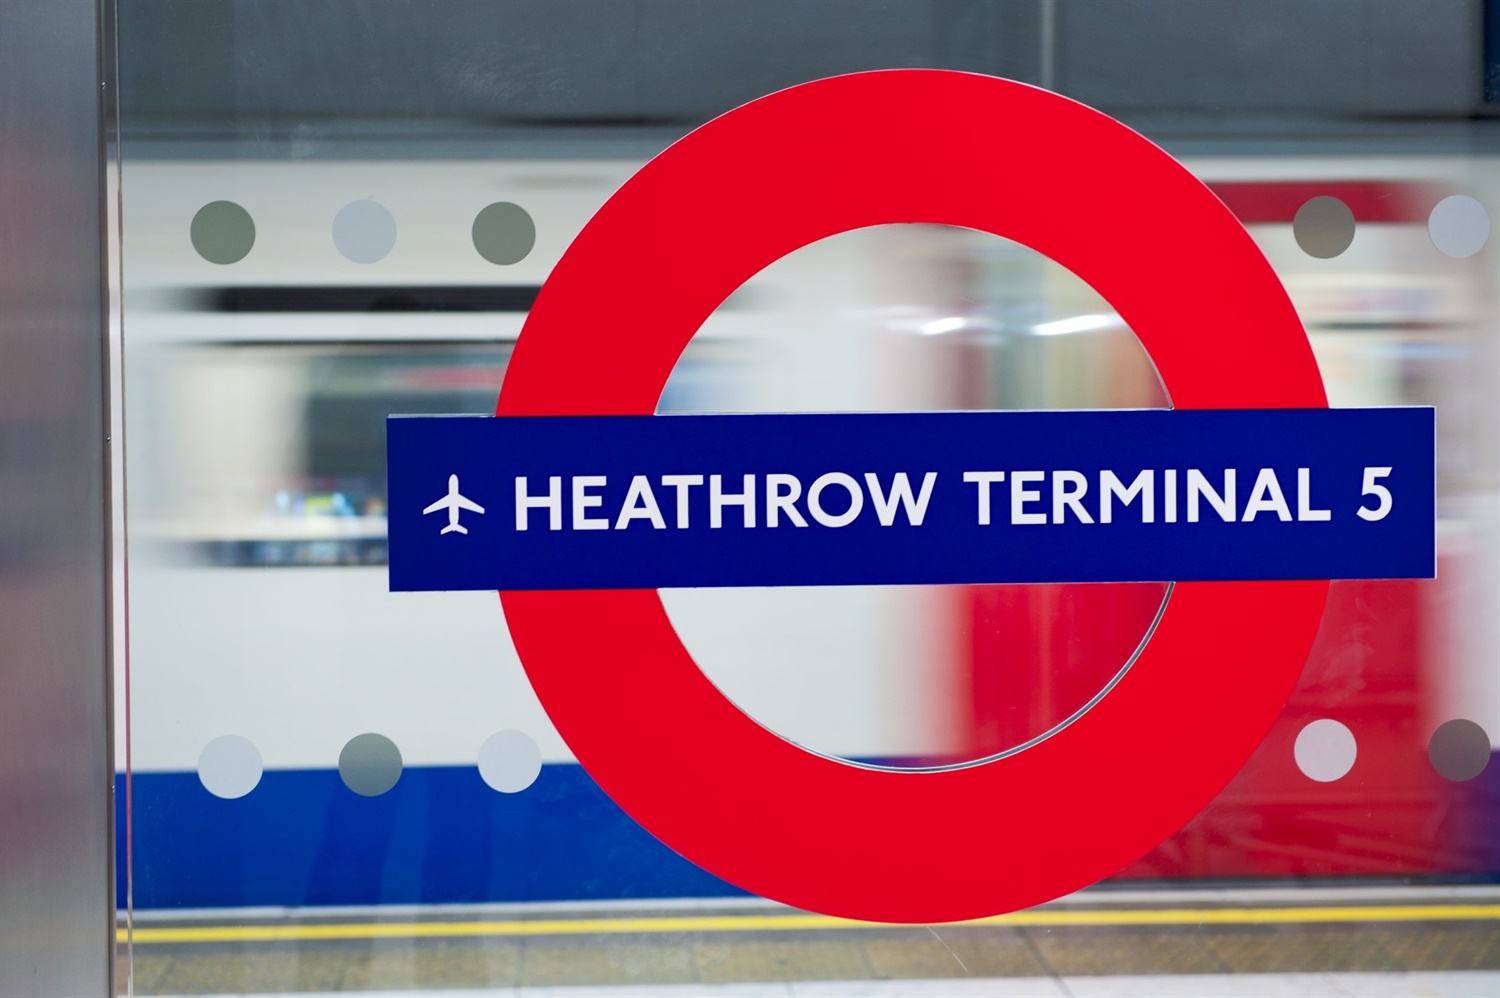 Deal struck to bring Elizabeth Line services to Heathrow 